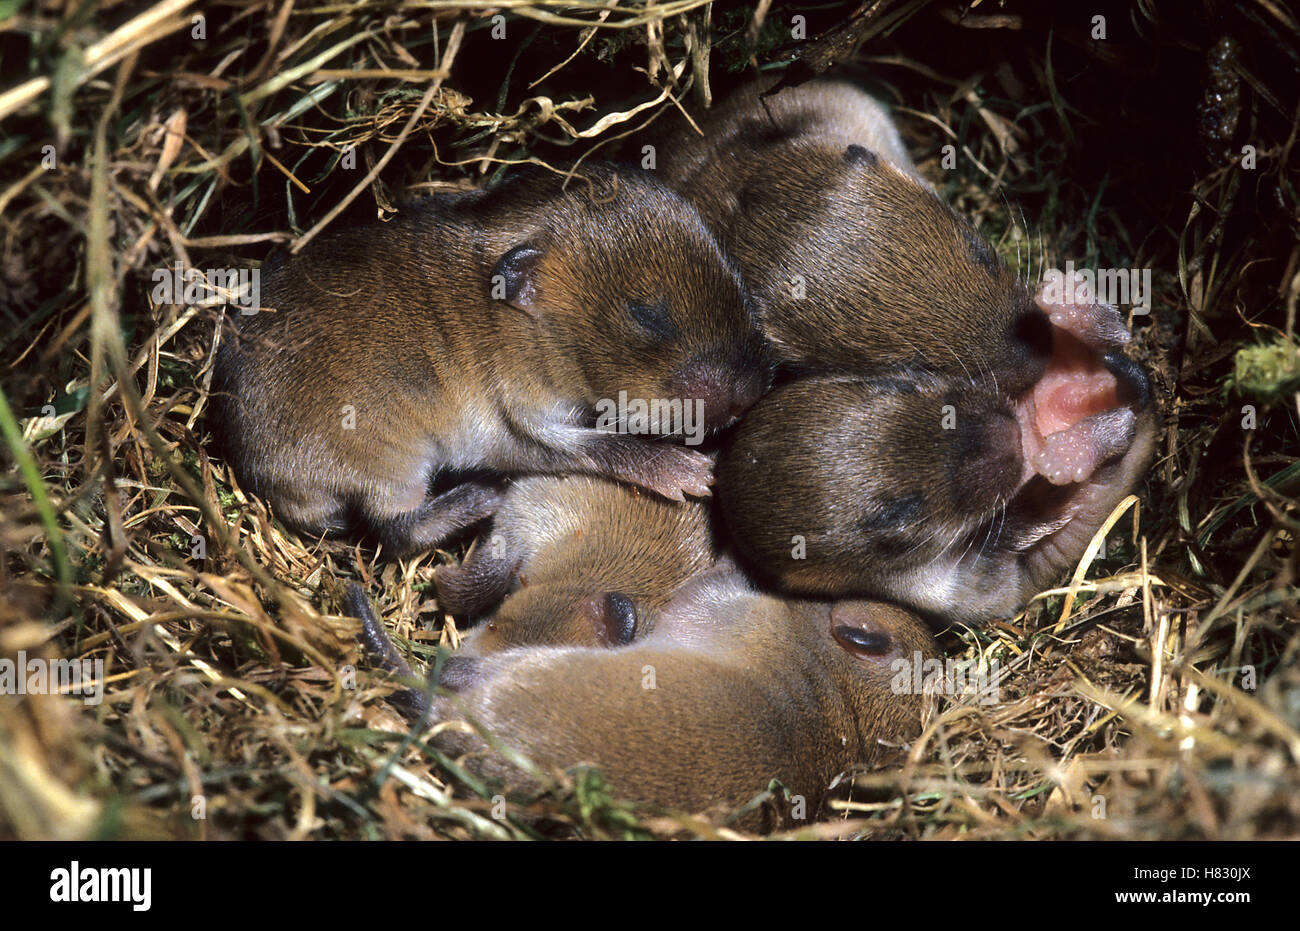 Common Vole (Microtus arvalis) infants in nest, Netherlands Stock Photo